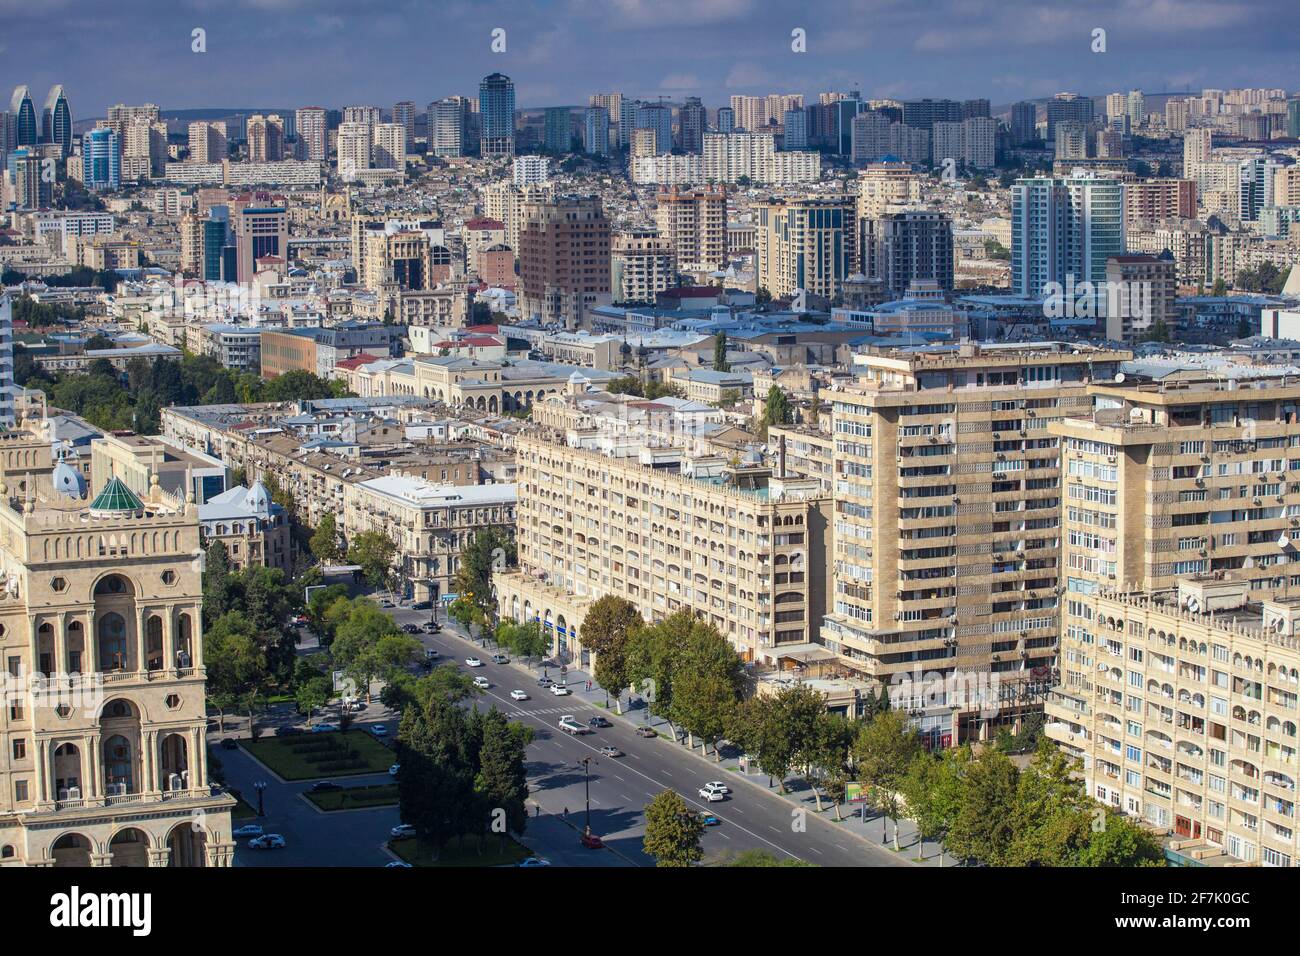 Azerbaijan, Baku, View of City center Stock Photo